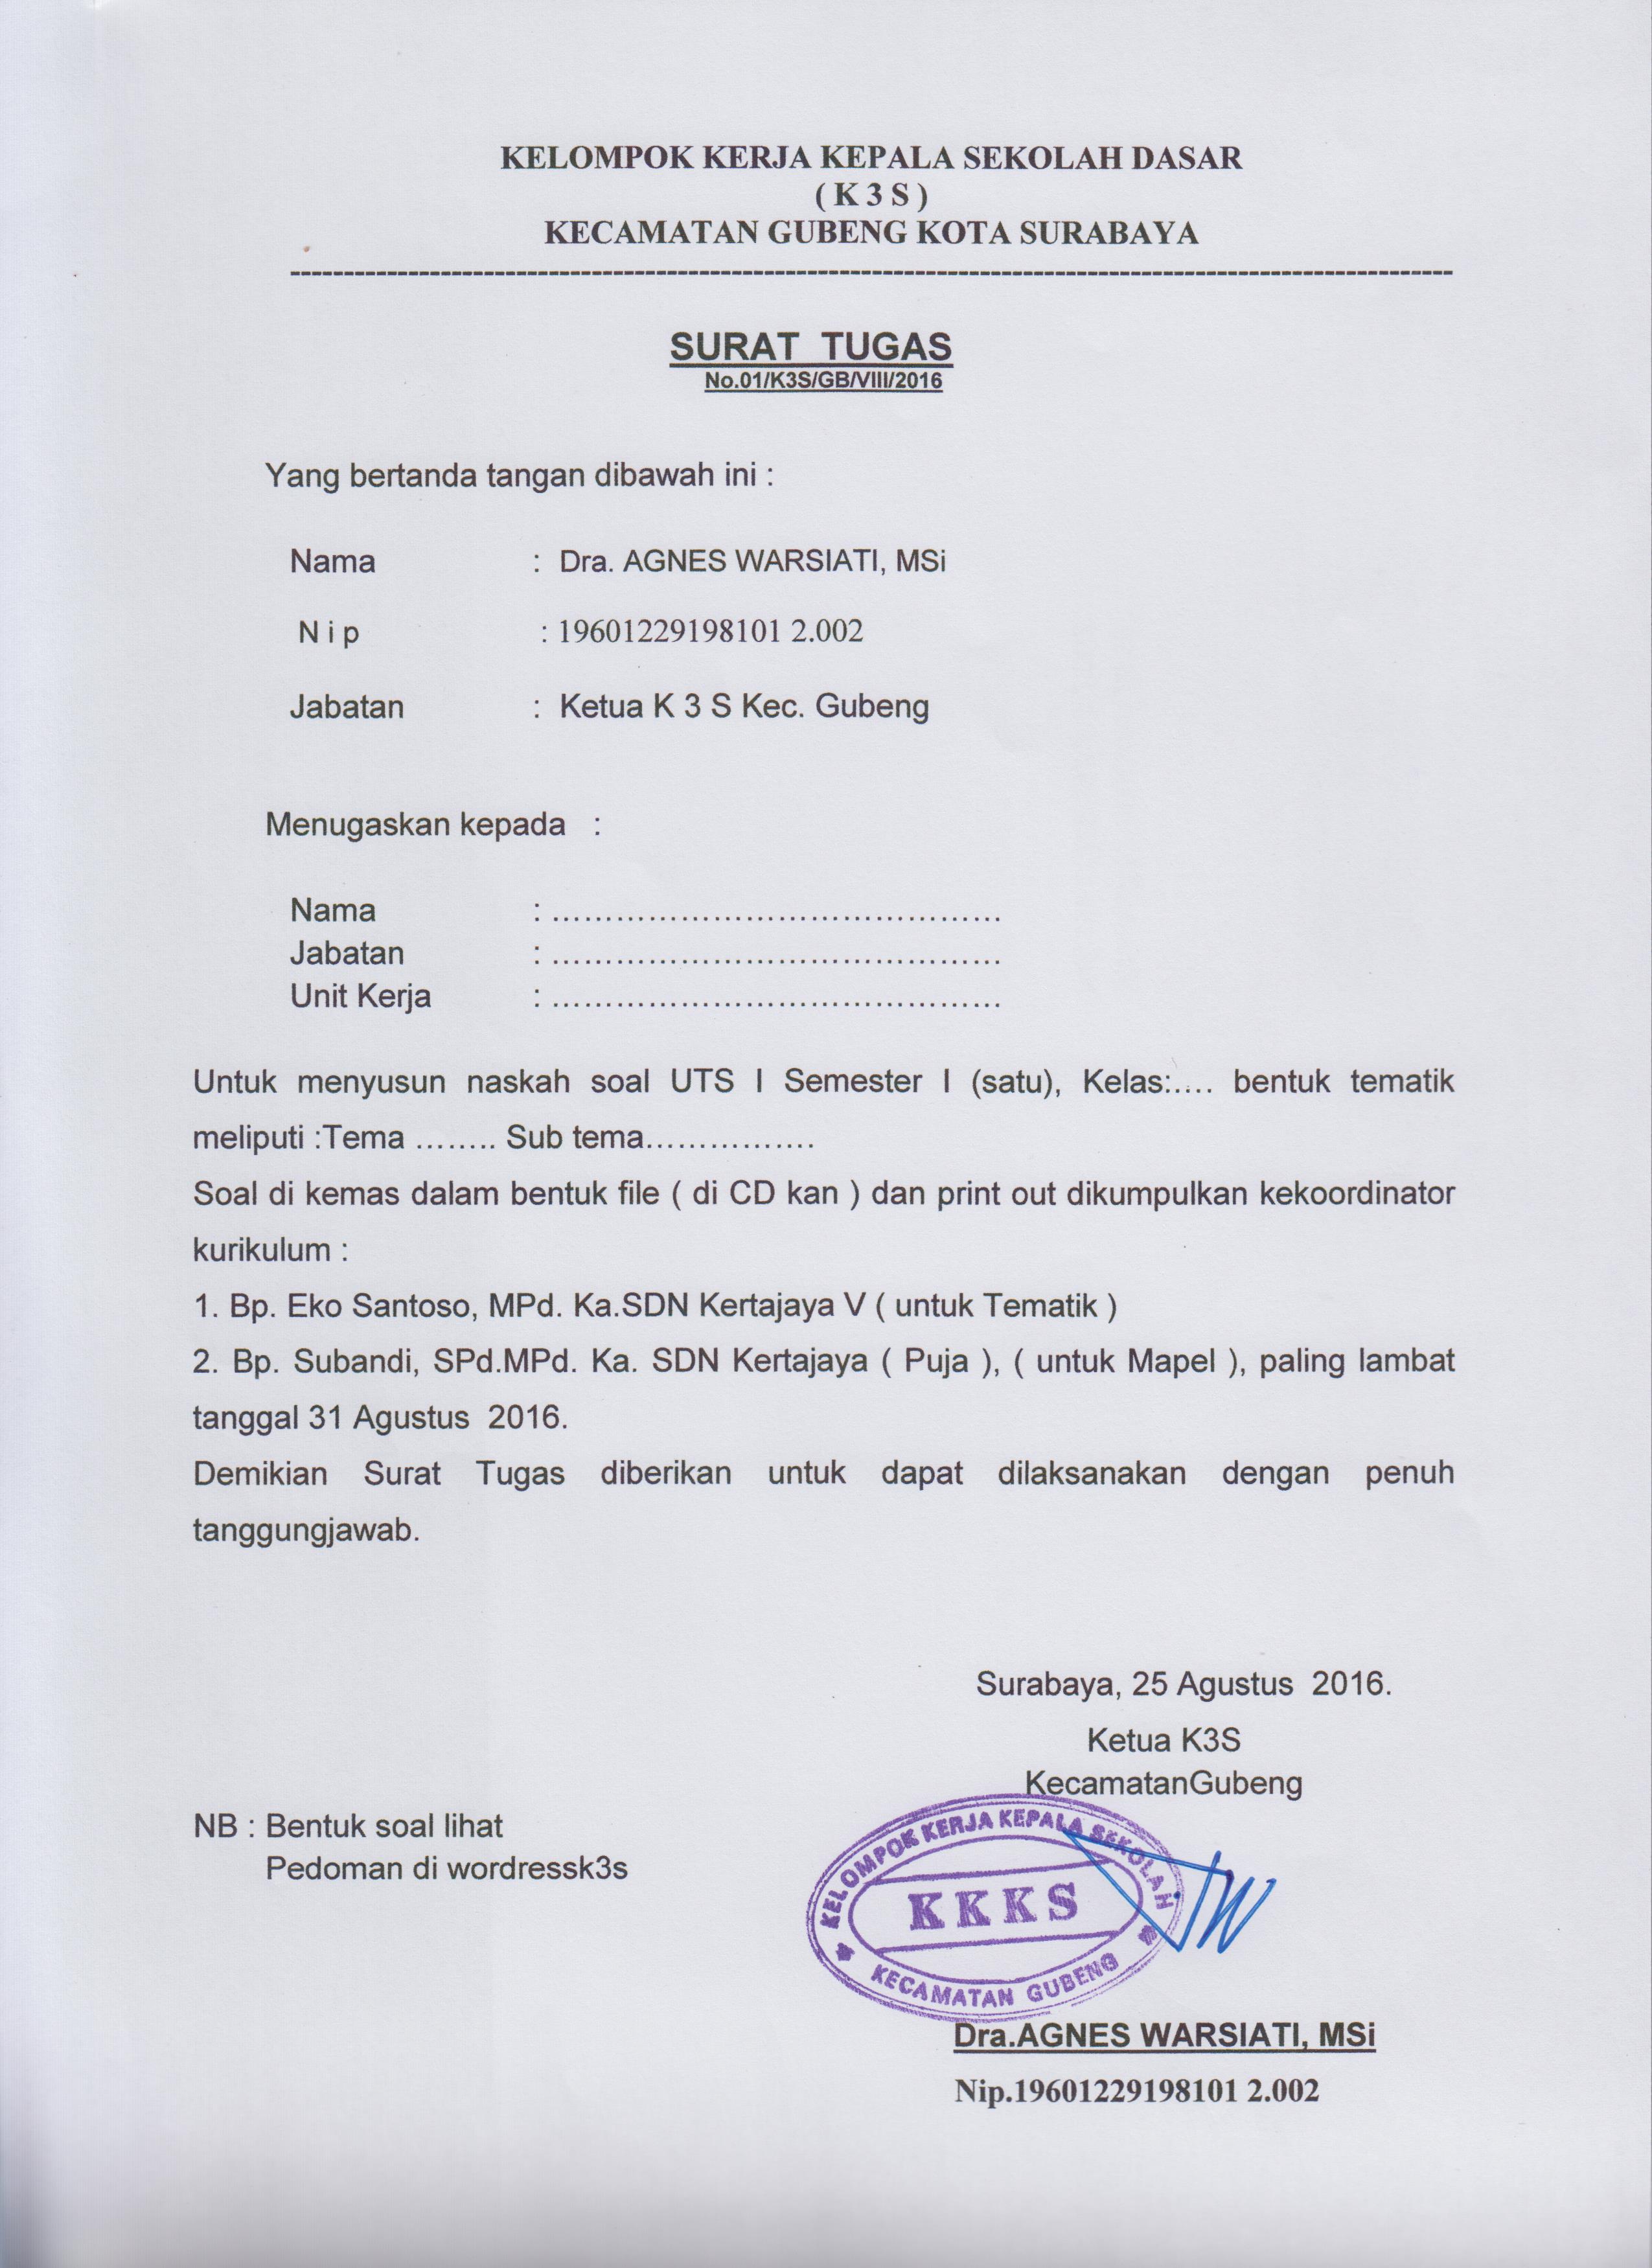 Surat Tugas Penyusunan Naskah Soal Uts 1 Semester 1 Kelompok Kerja Kepala Sekolah Kecamatan Gubeng